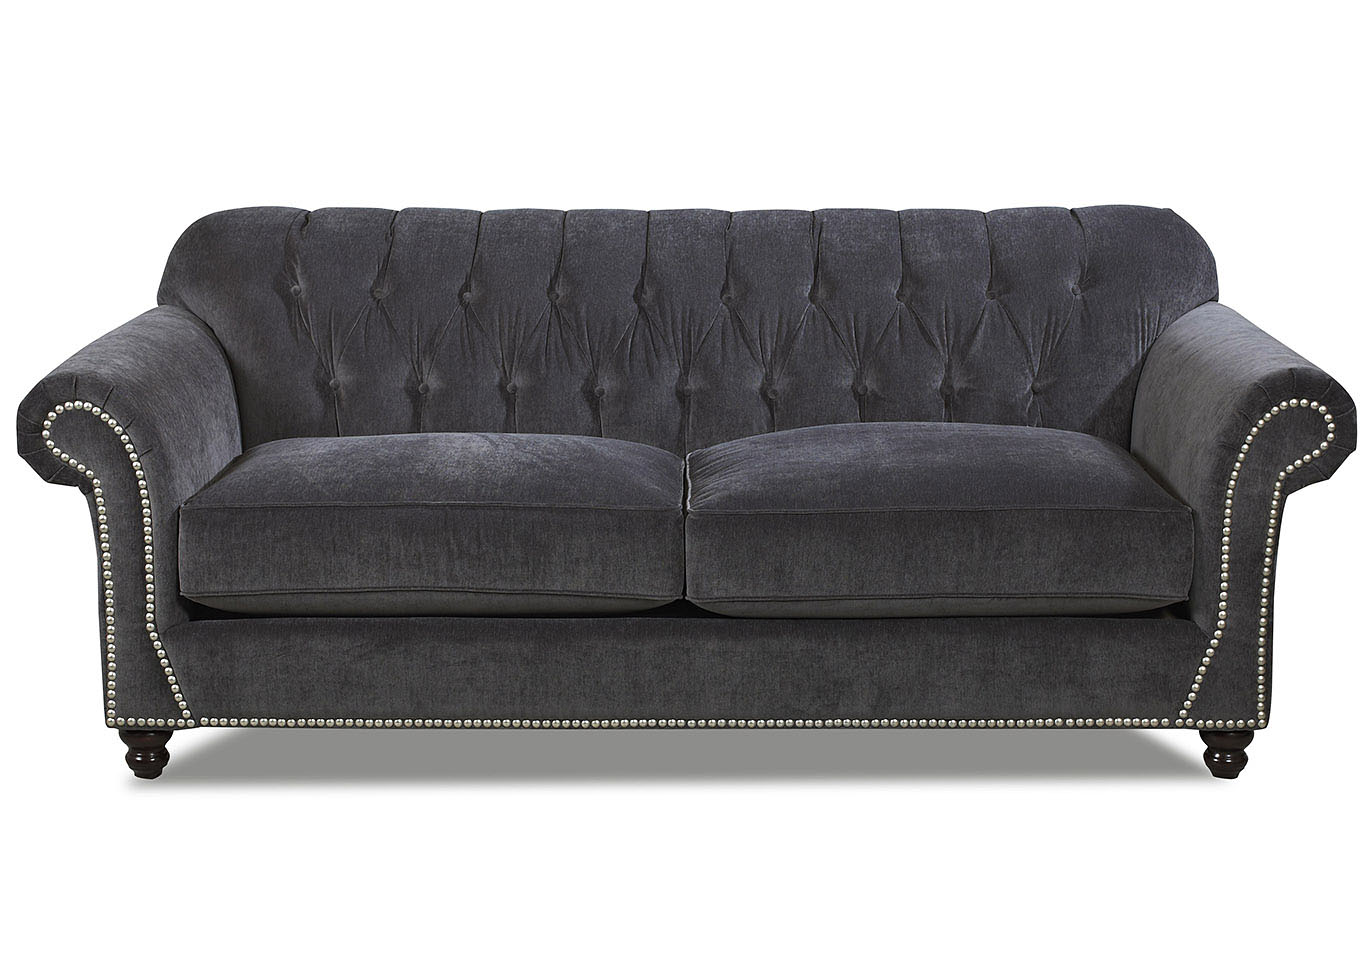 Flynn Seal Black Stationary Fabric Sofa,Klaussner Home Furnishings